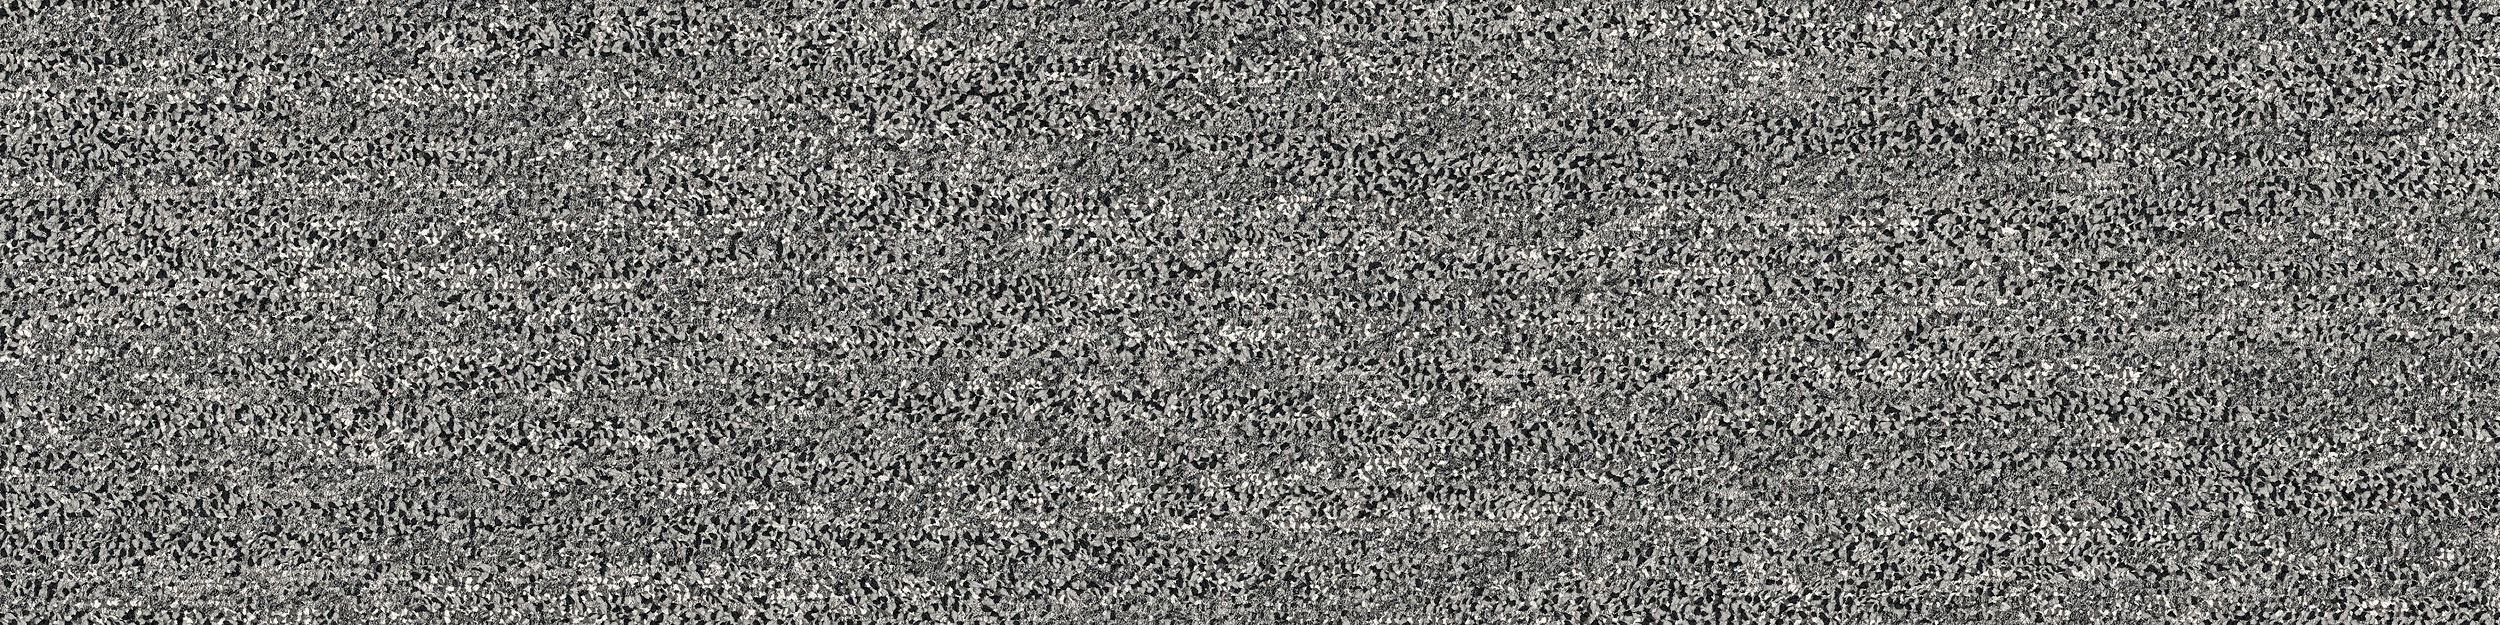 Mantle Rock Carpet Tile In Grey Stone imagen número 2